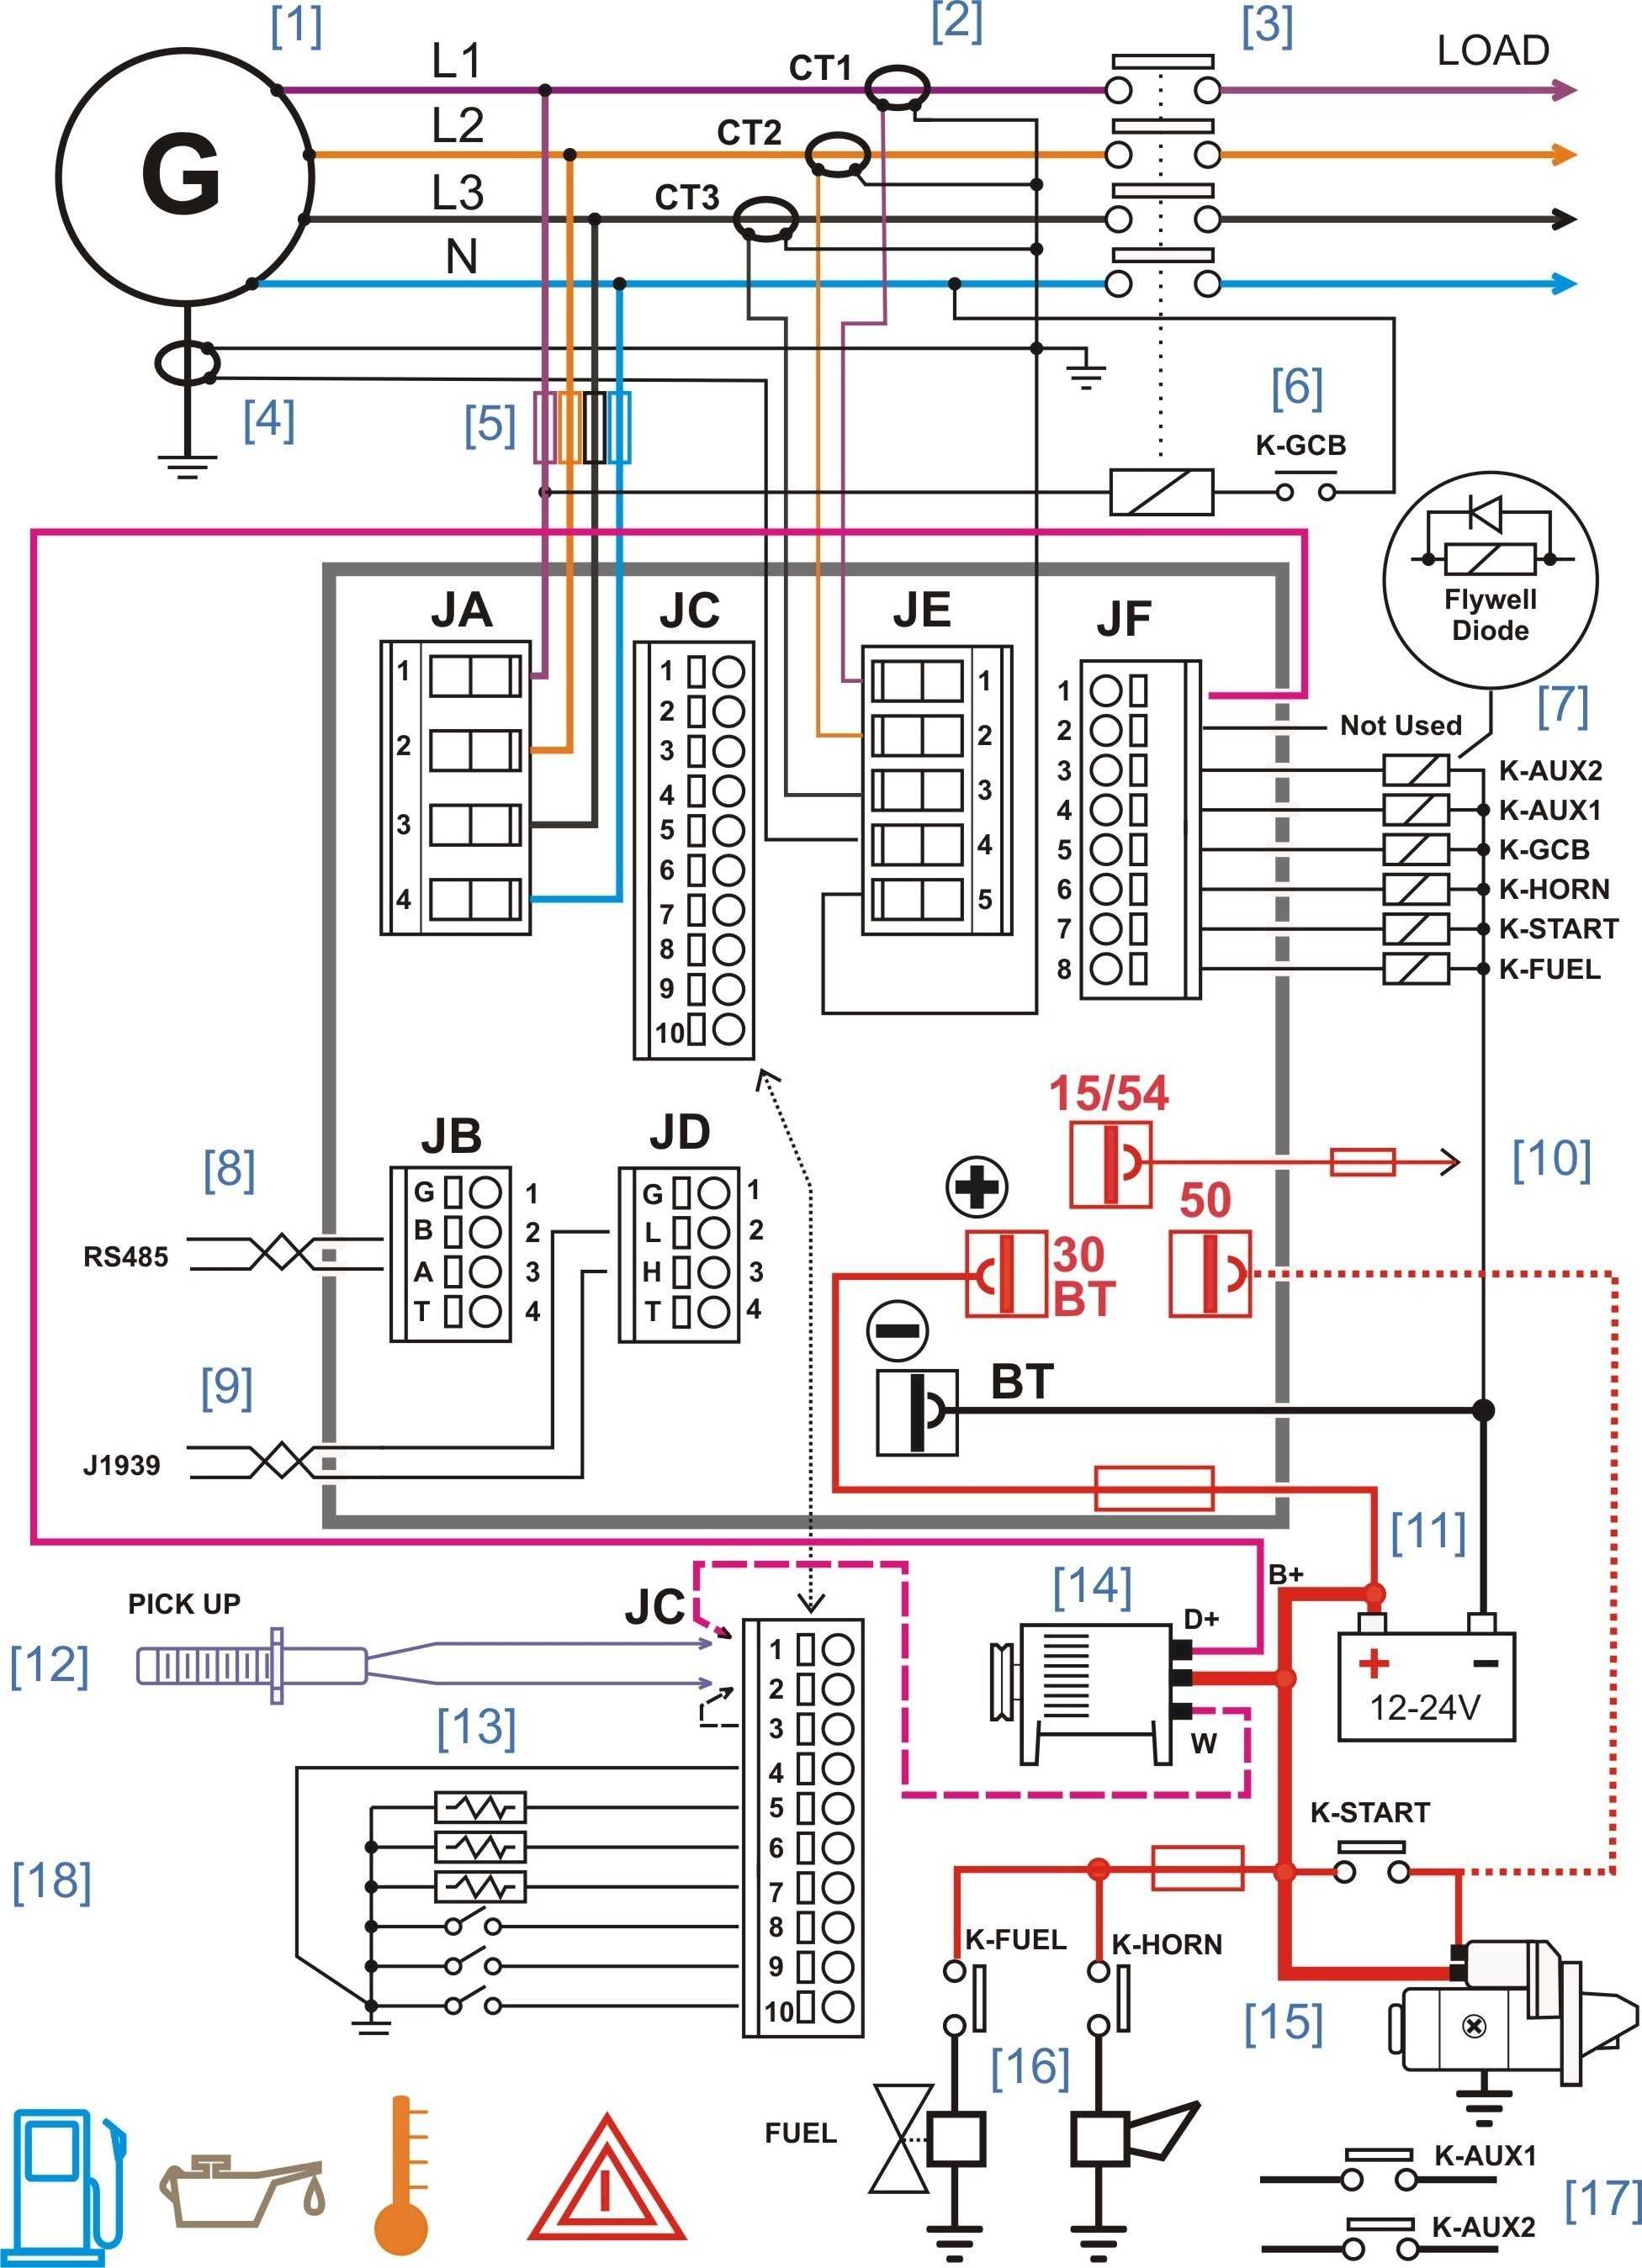 Circuit Diagram App Ipad New Schematic Diagram App Ipad Application Wiring Diagram •